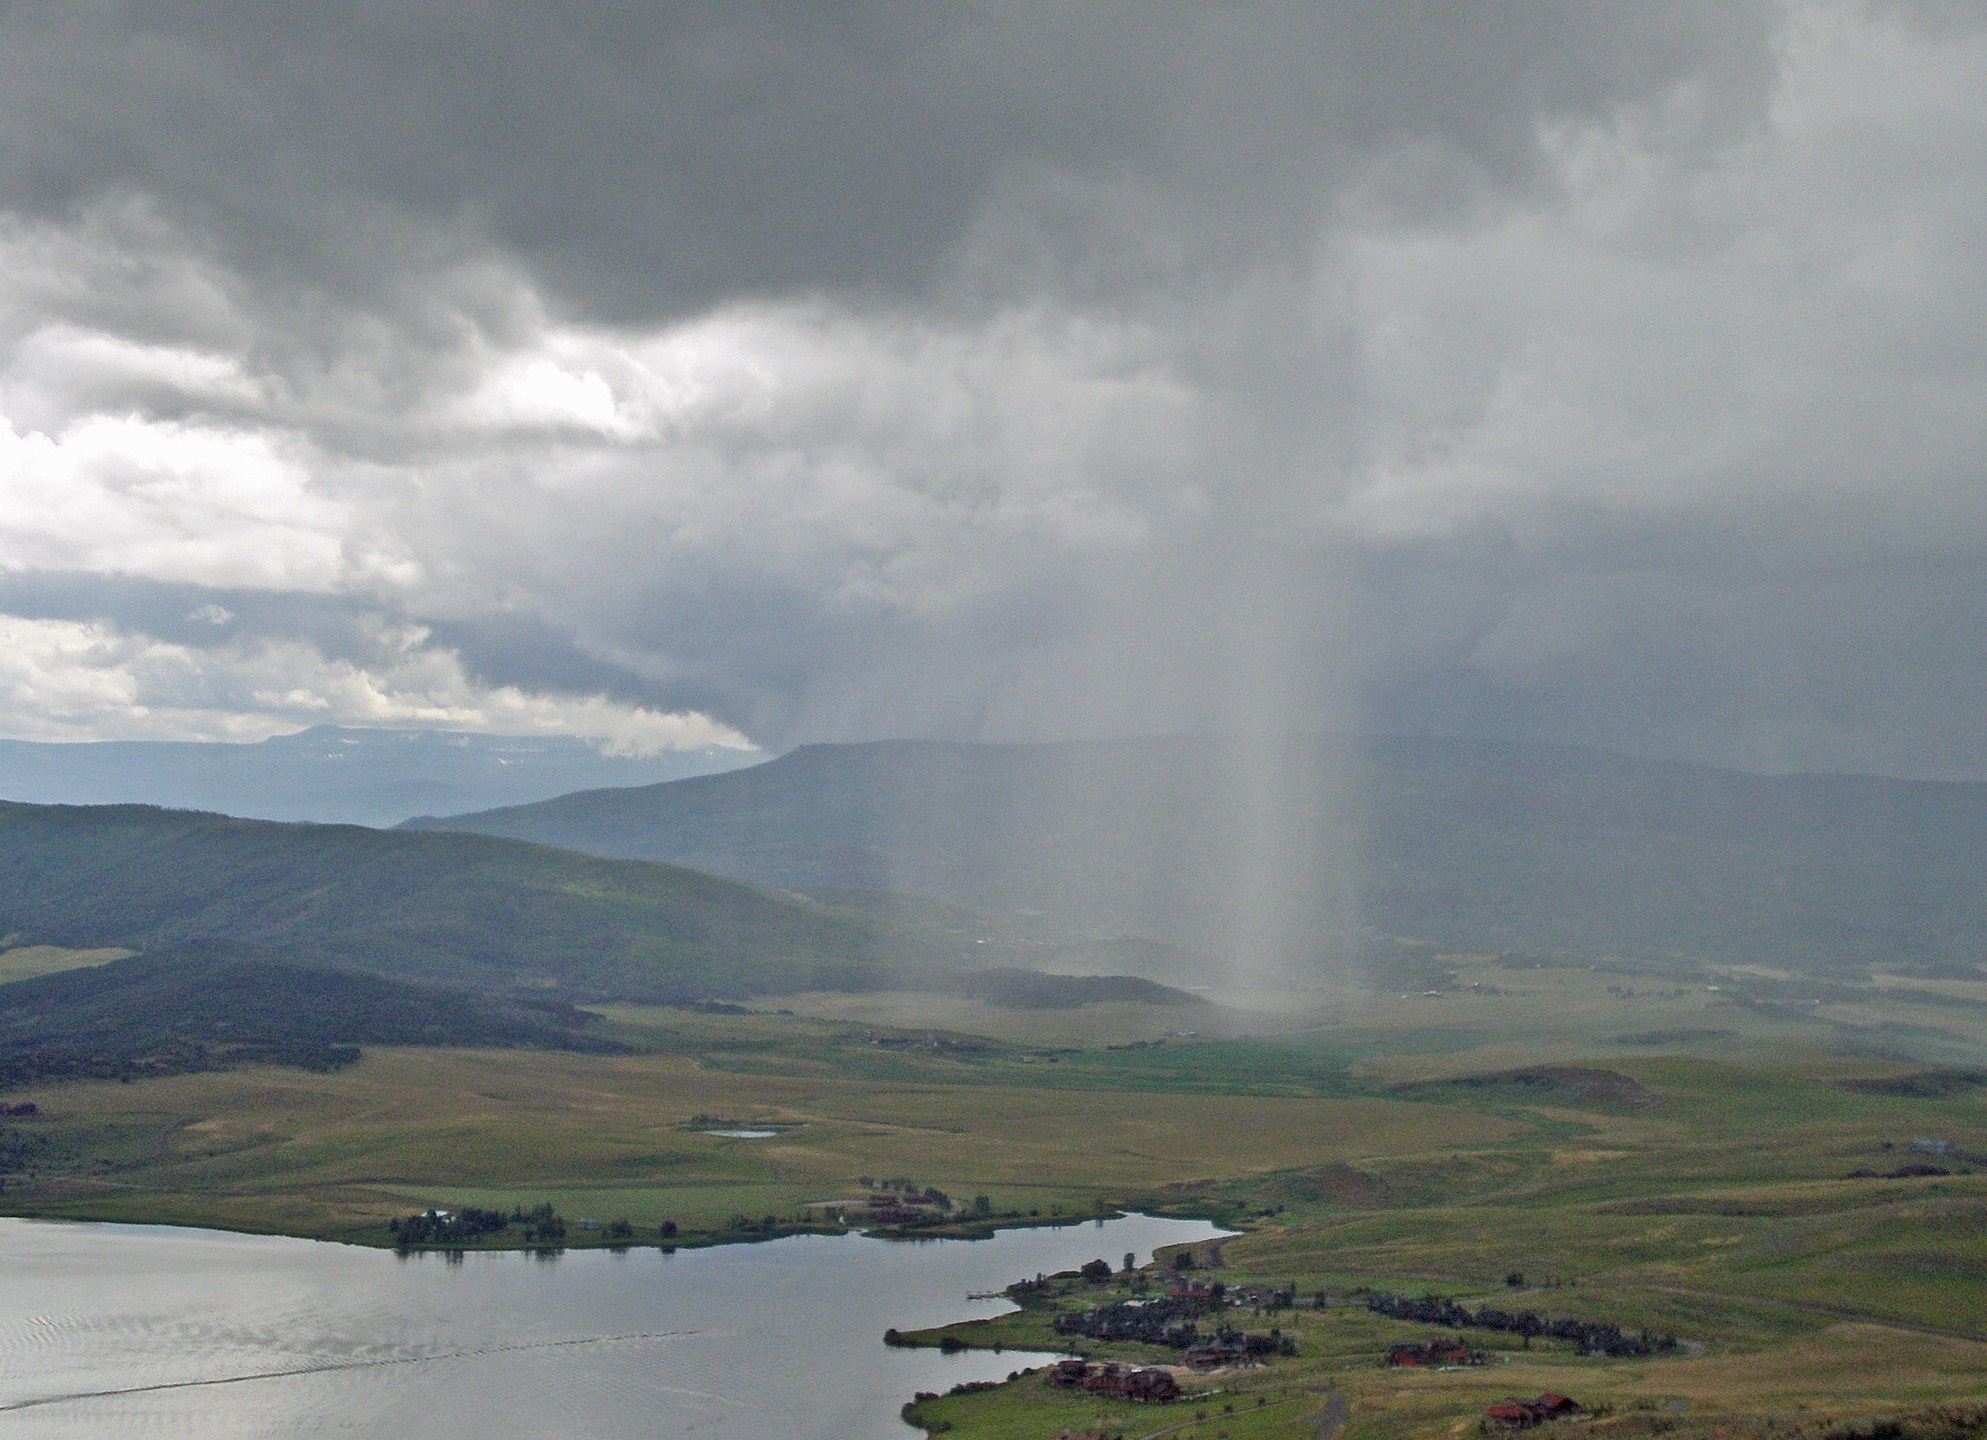 A localized heavy summer rainstorm in Colorado.